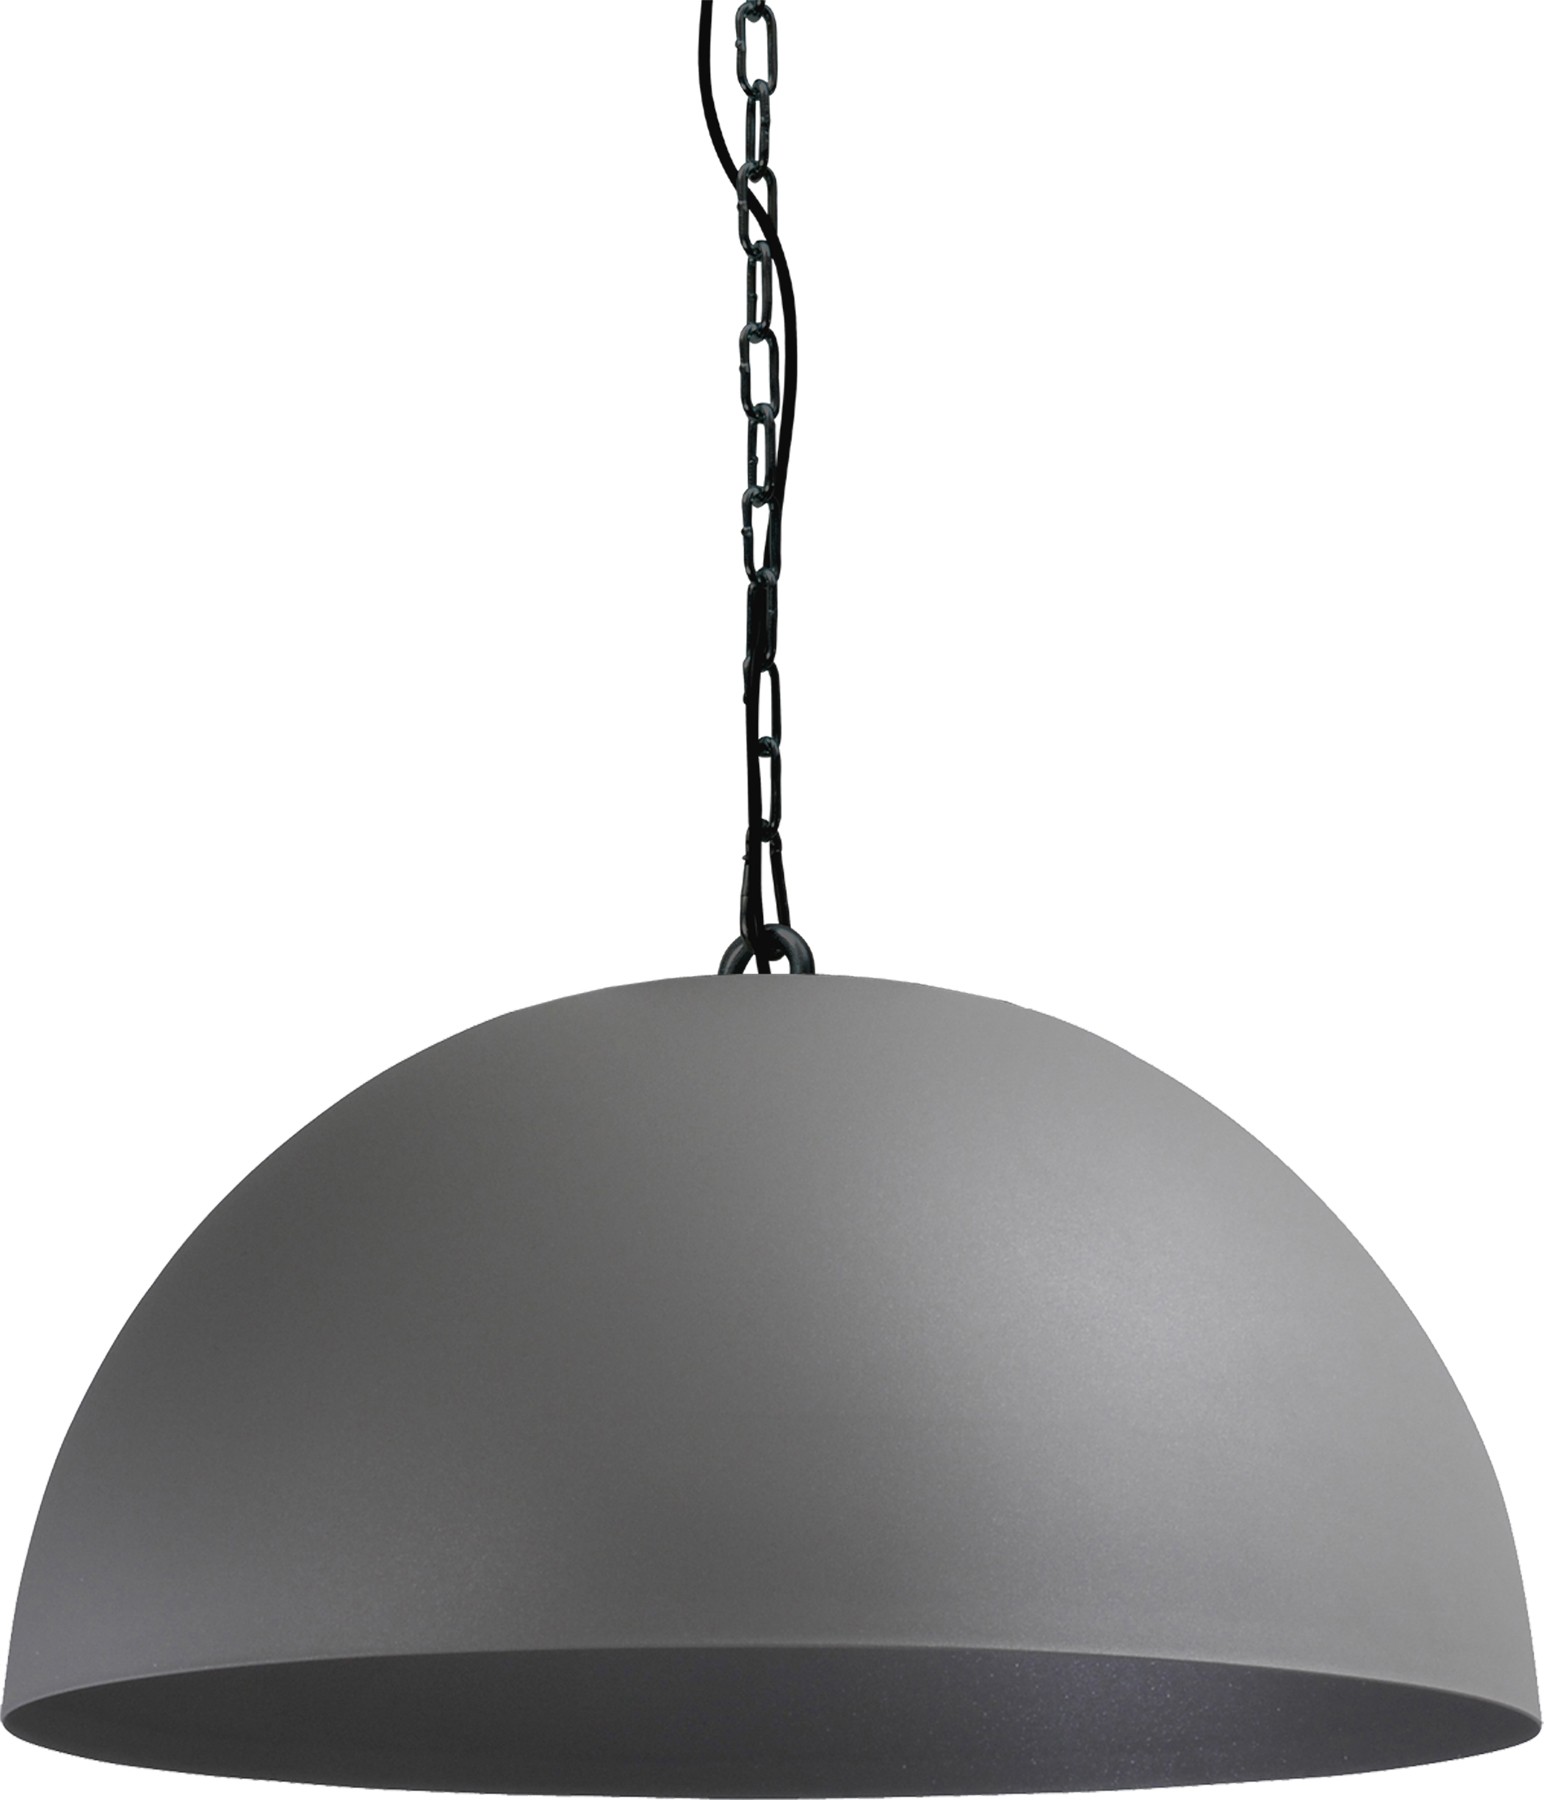 Pendelleuchte grau-schwarz, Beton-look, Industrielampe/ Retro-style, Ø: 60 cm